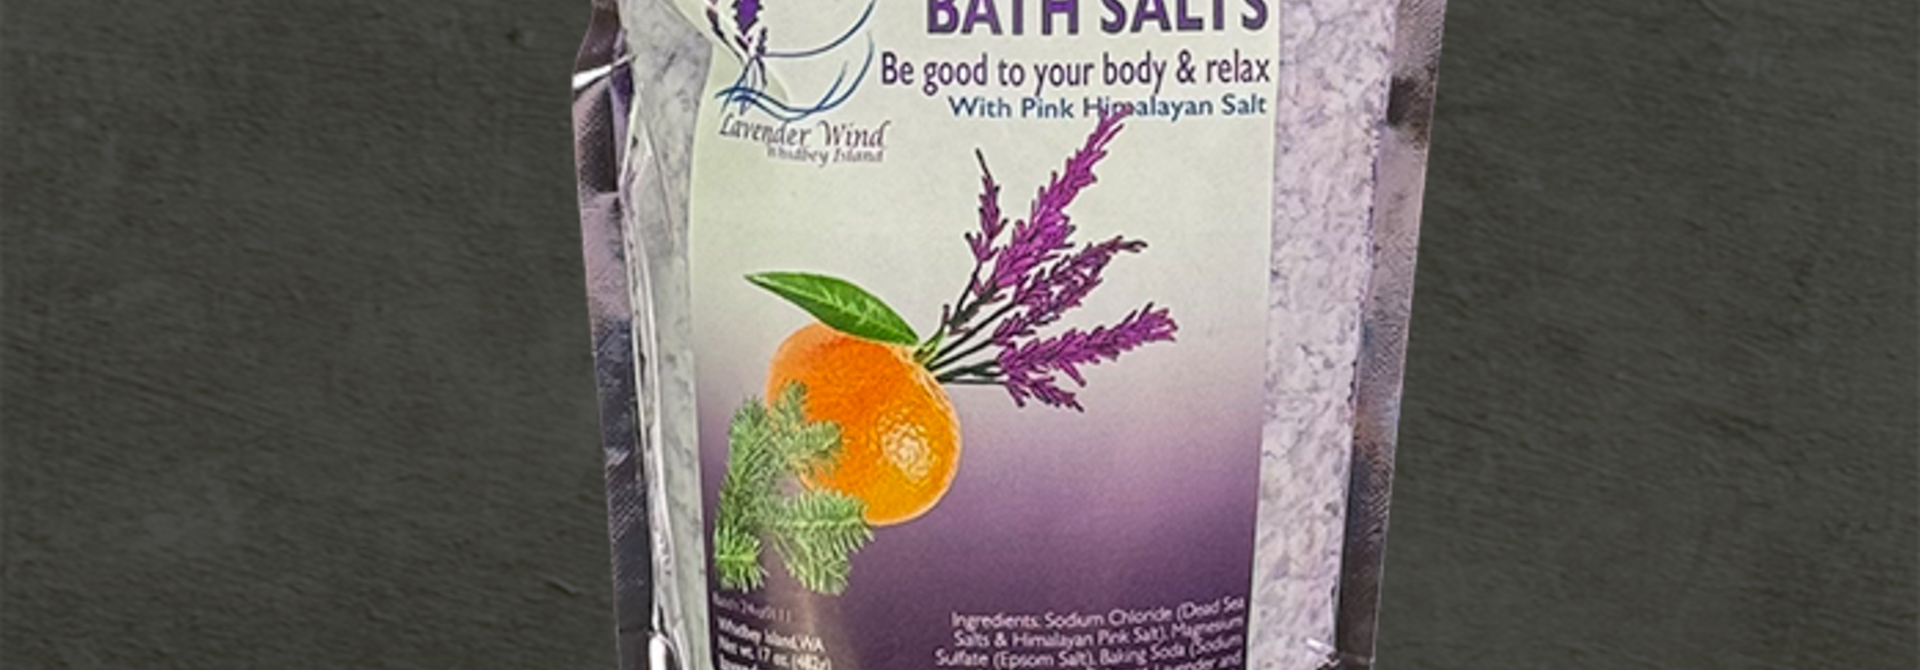 Purifying Bath Salts